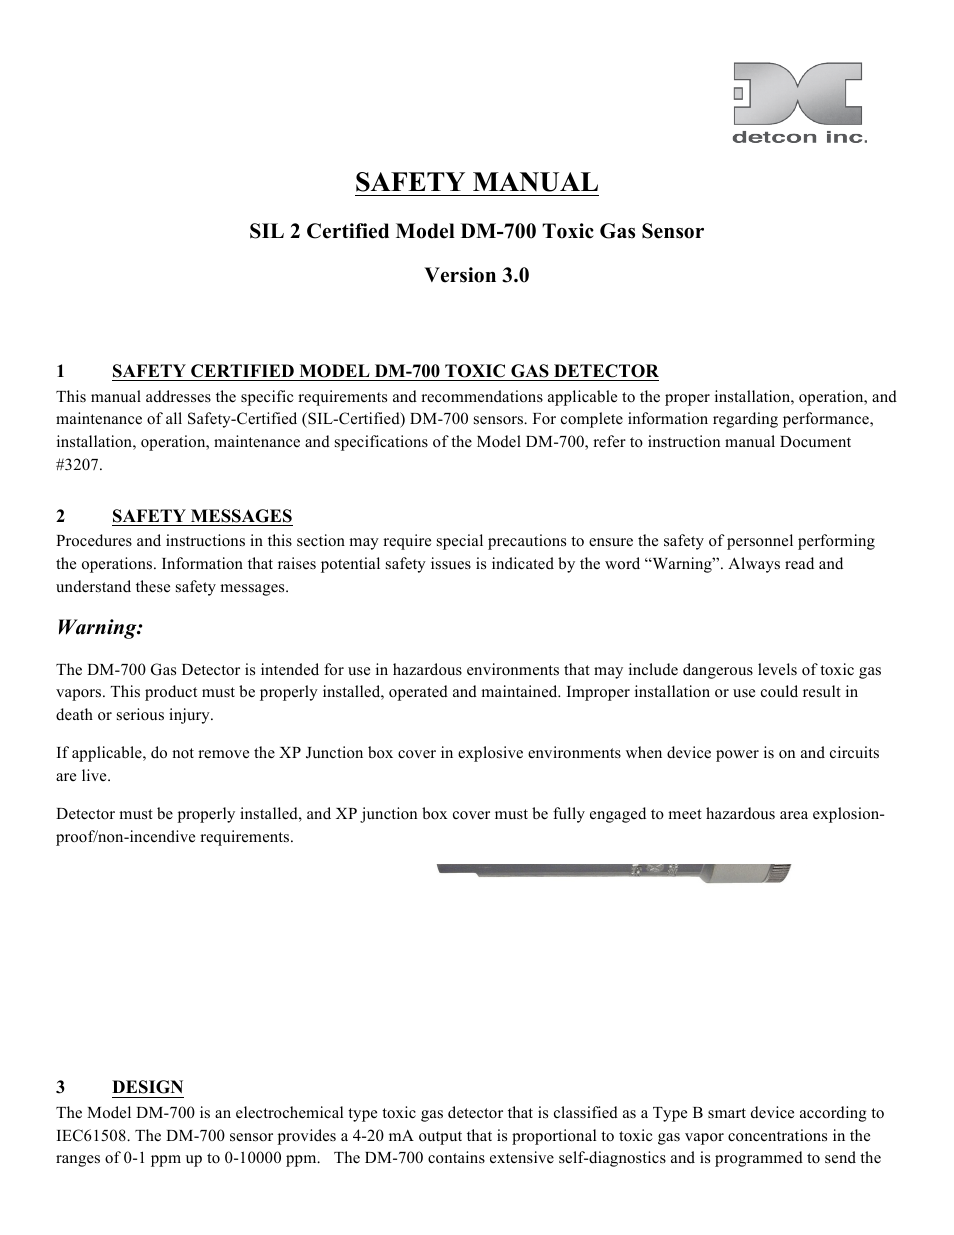 DM-700 SIL 2 Safety Manual